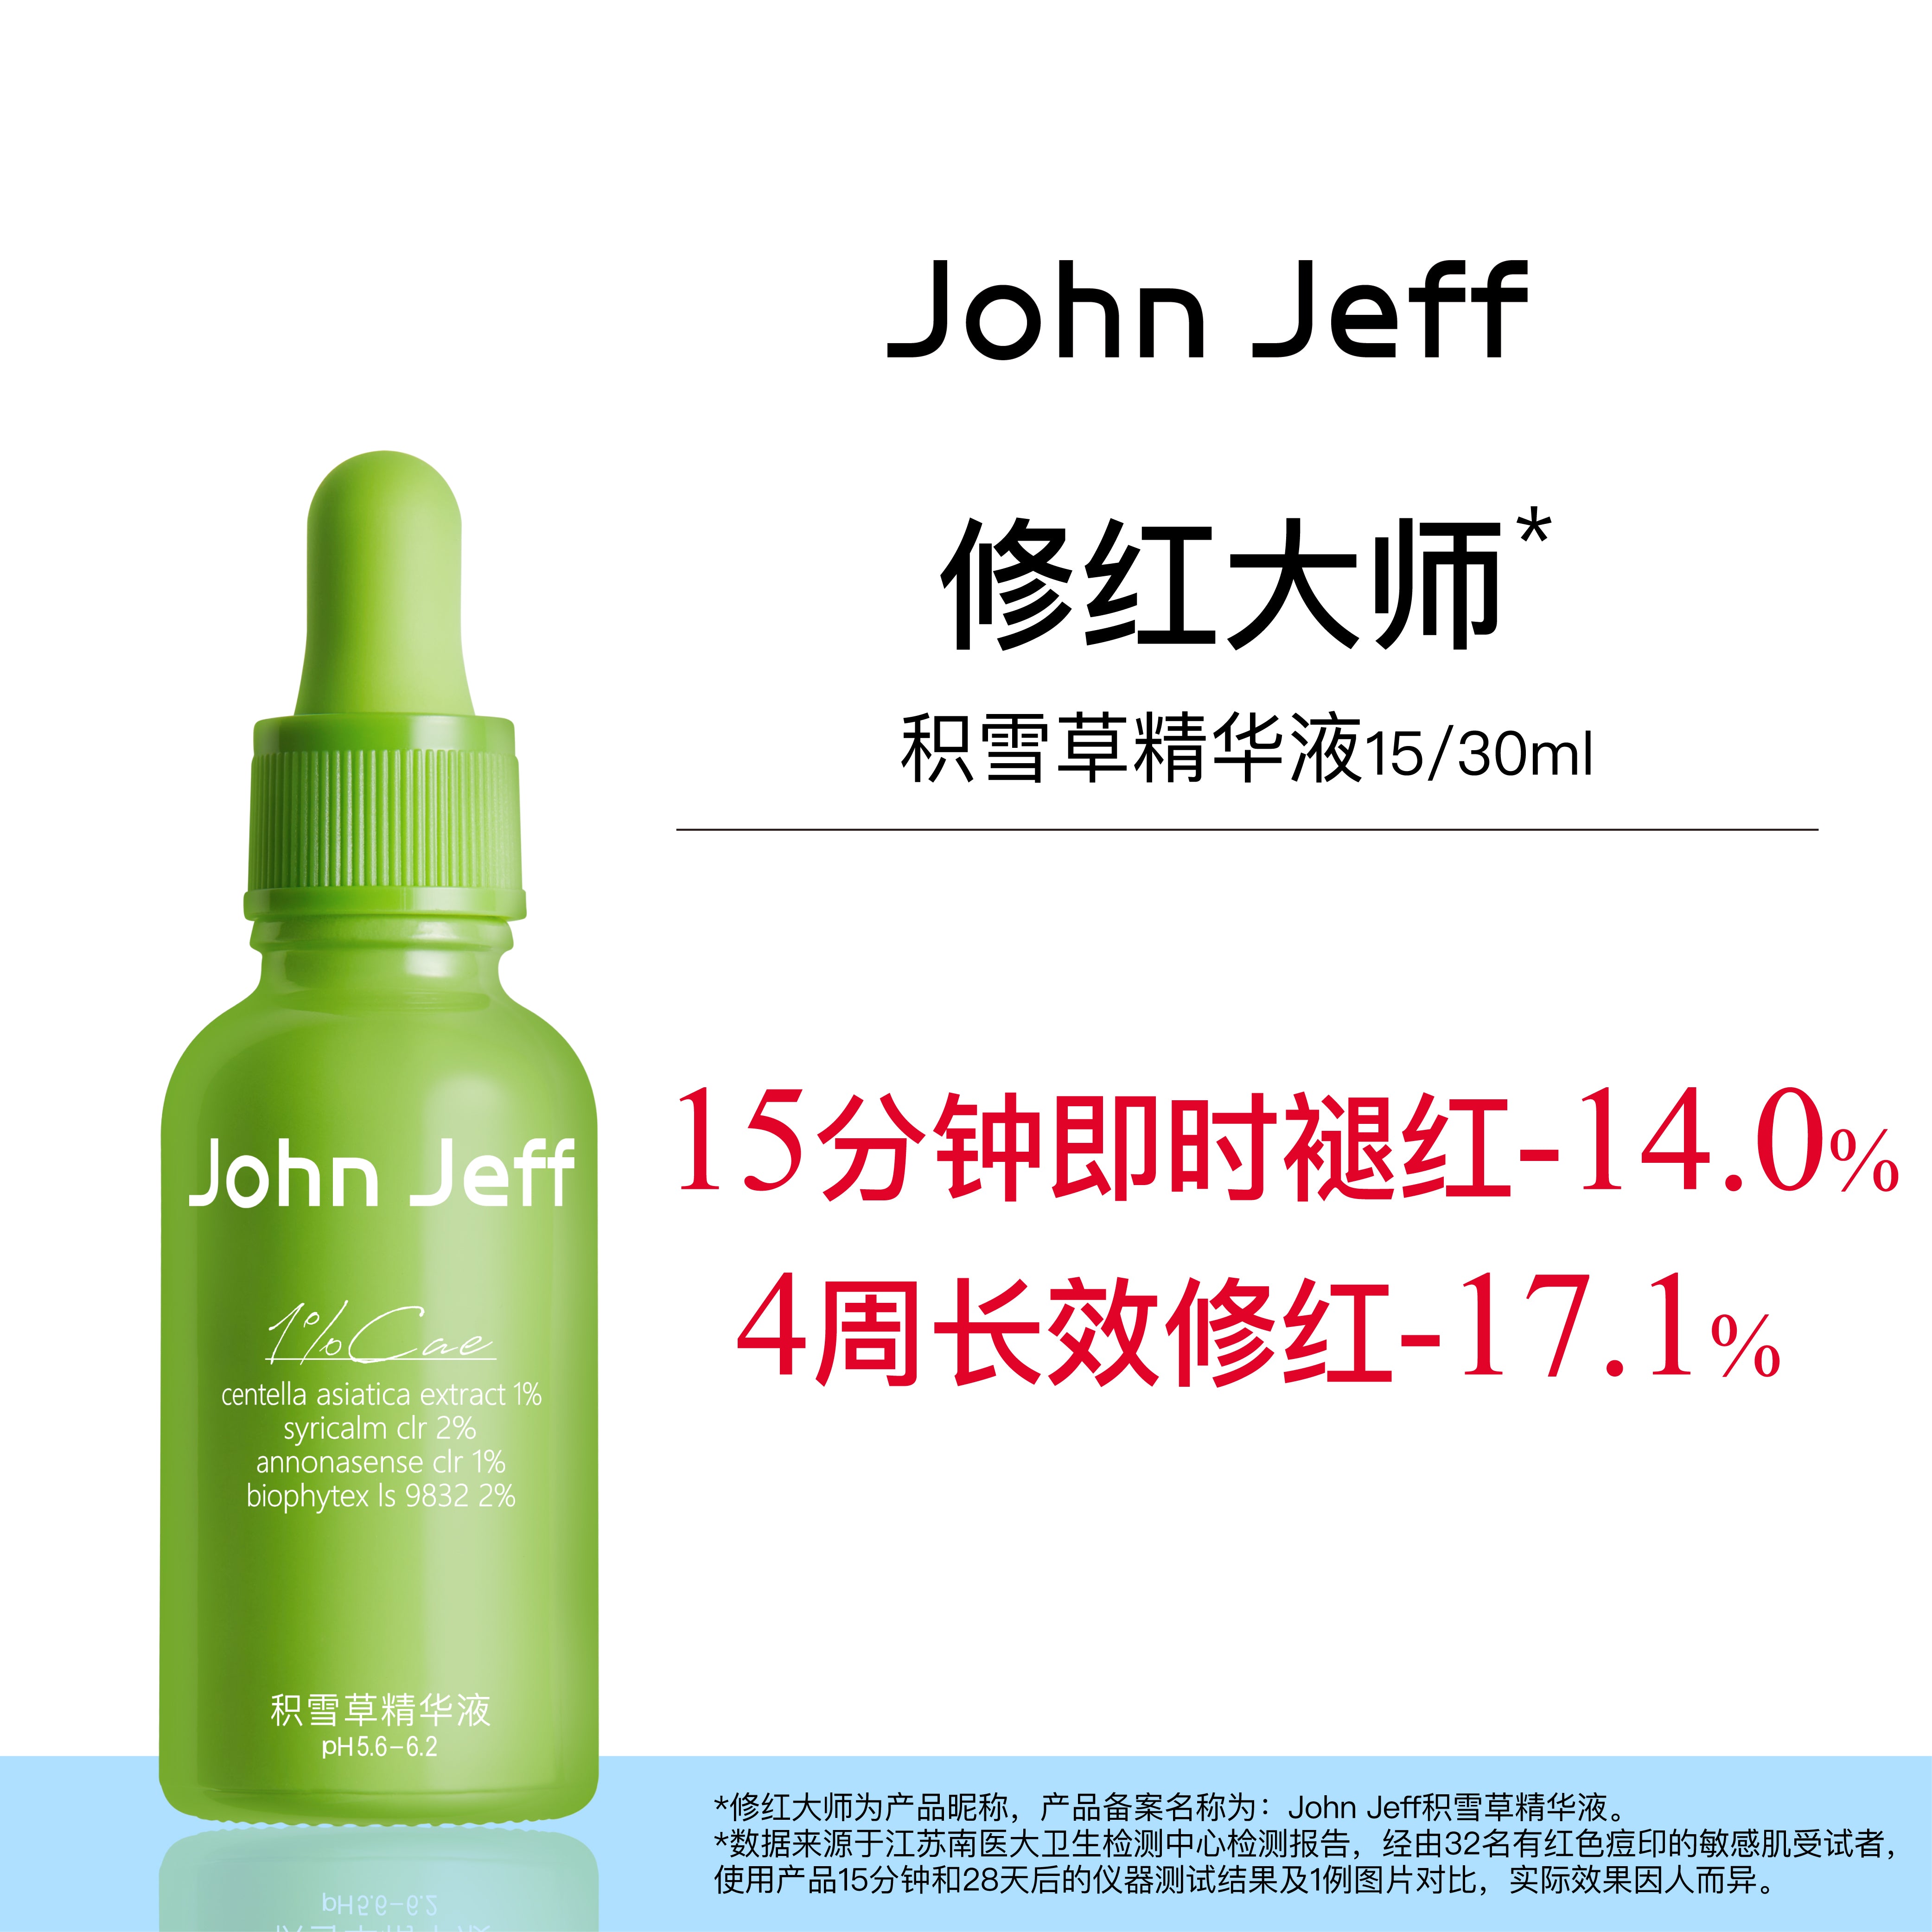 John Jeff 1% Centella Asiatica Essence 15ml John Jeff 1%积雪草精华液